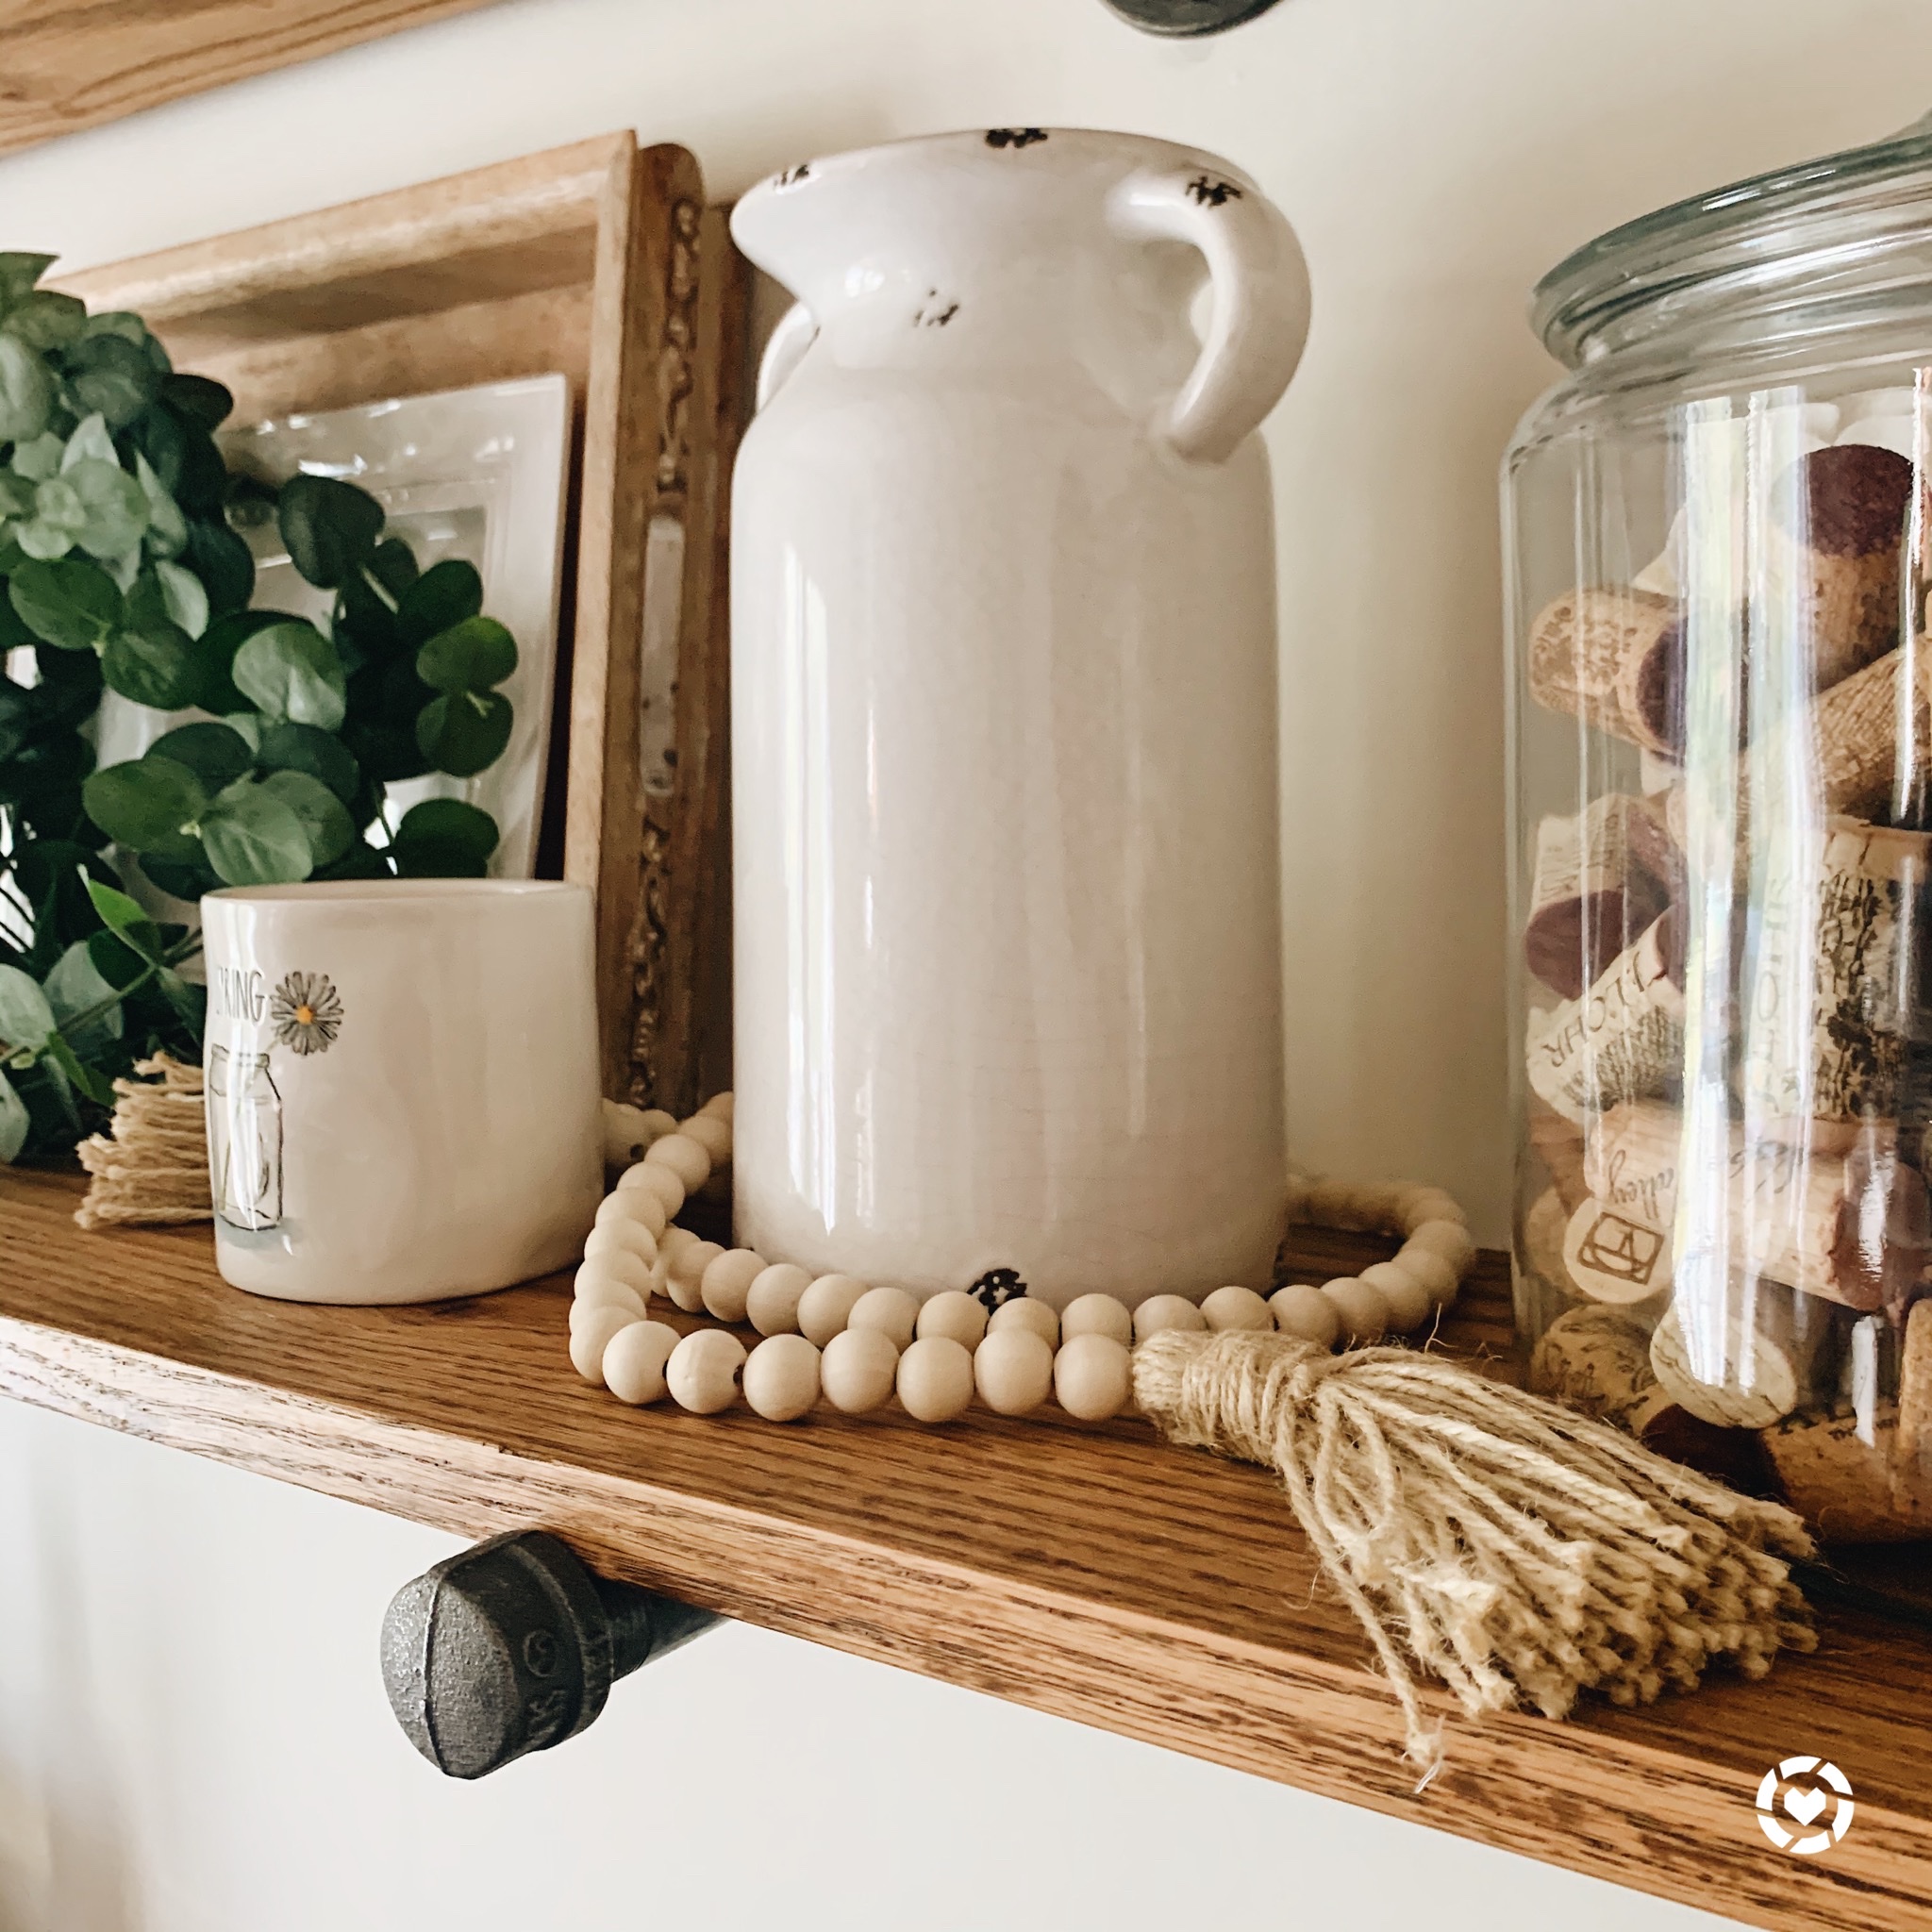 Vintage milk jug vase and wooden bead garland - farmhouse dining room decor essentials! | ourlittlehomestyle.com